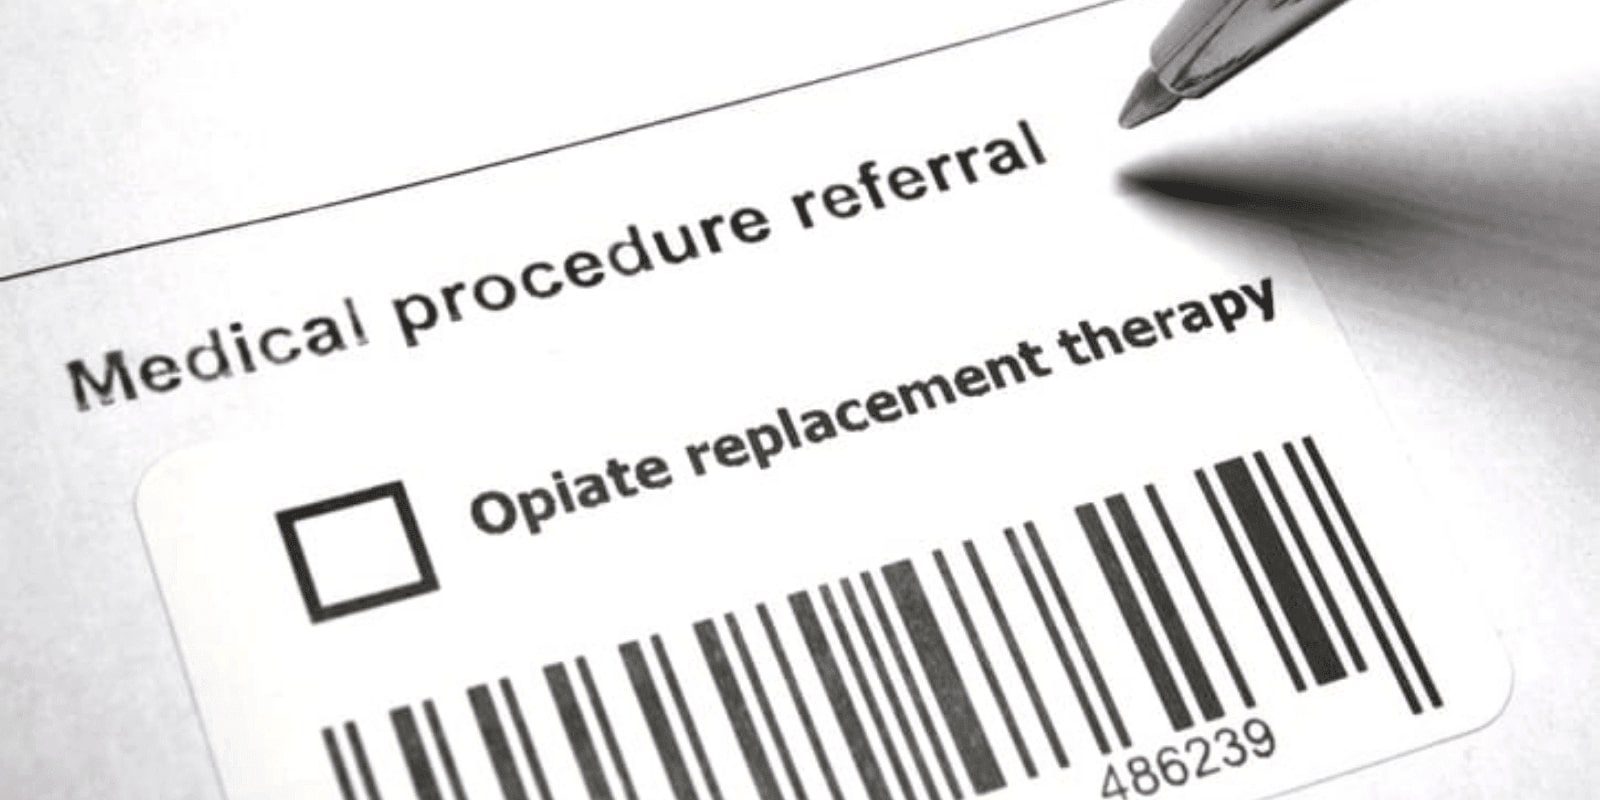 Medical procedure referral